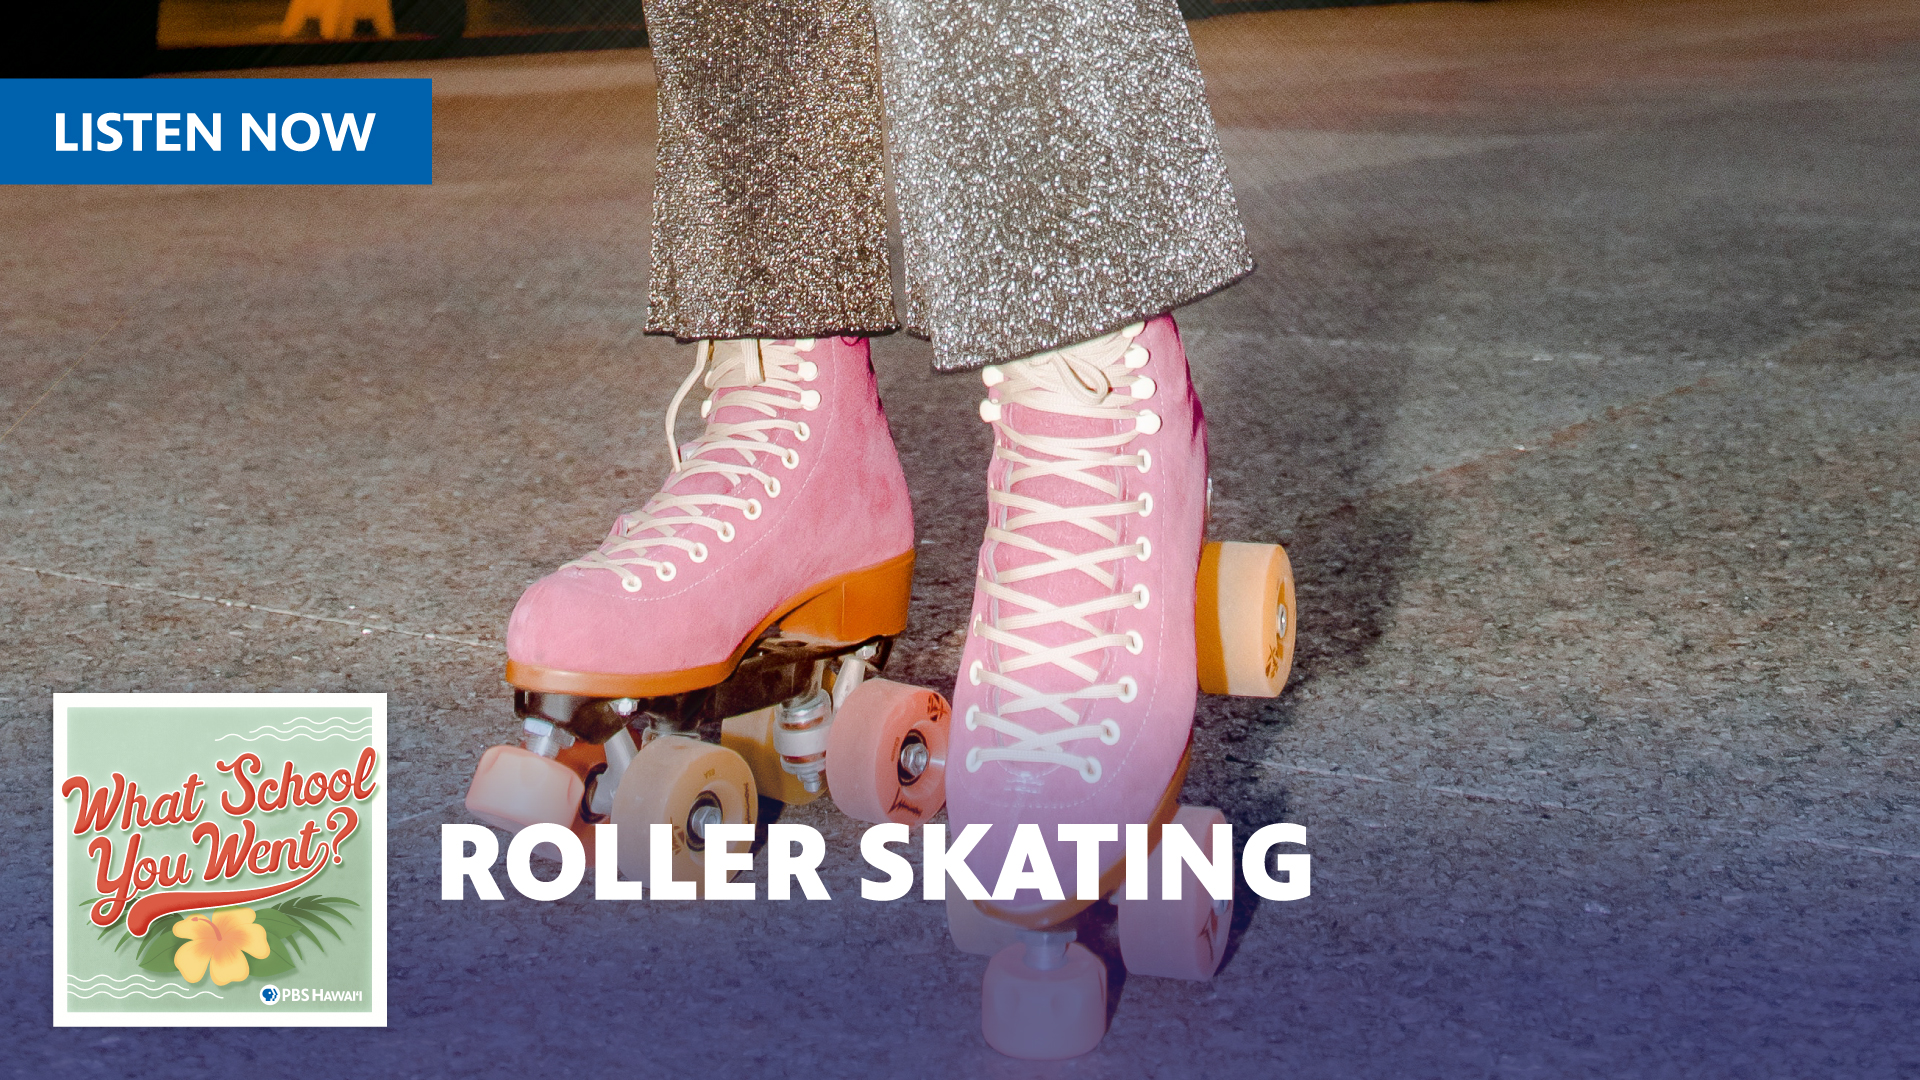 Roller Skating